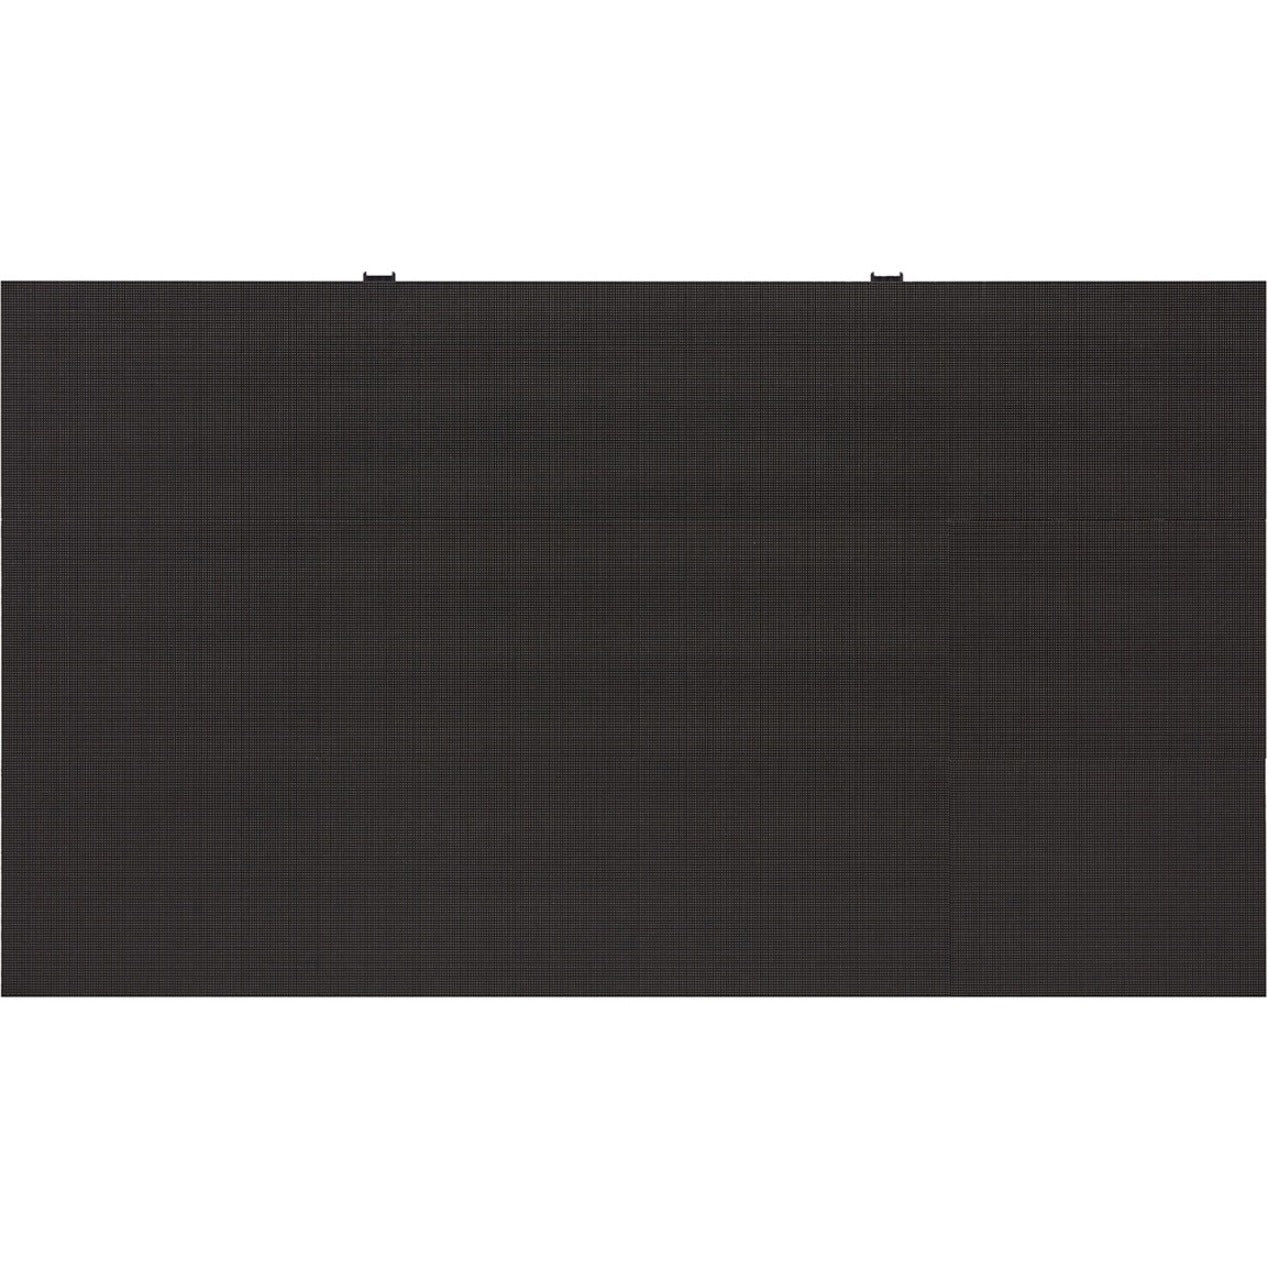 LG LSAC025-MK Digital Signage Display